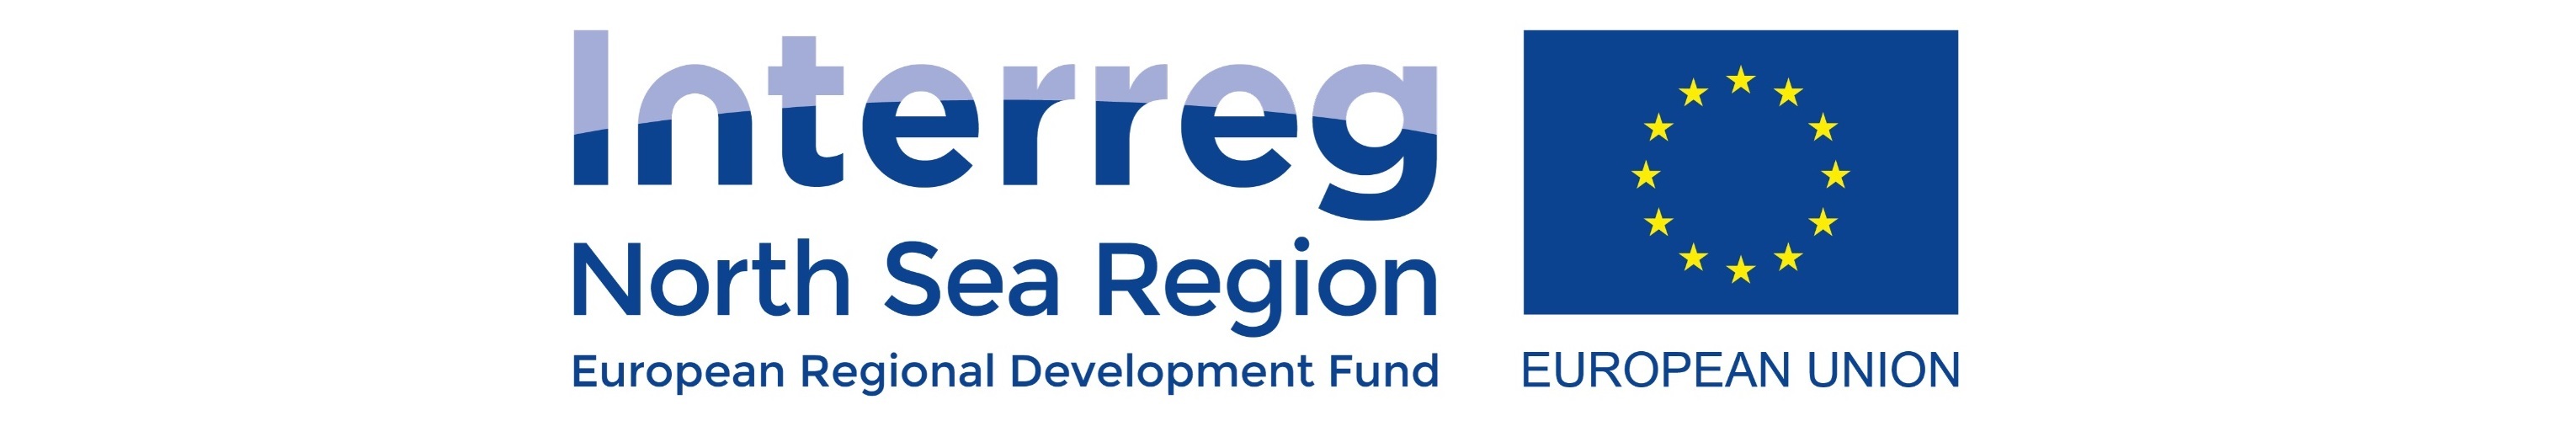 Logo Interreg North Sea Region1